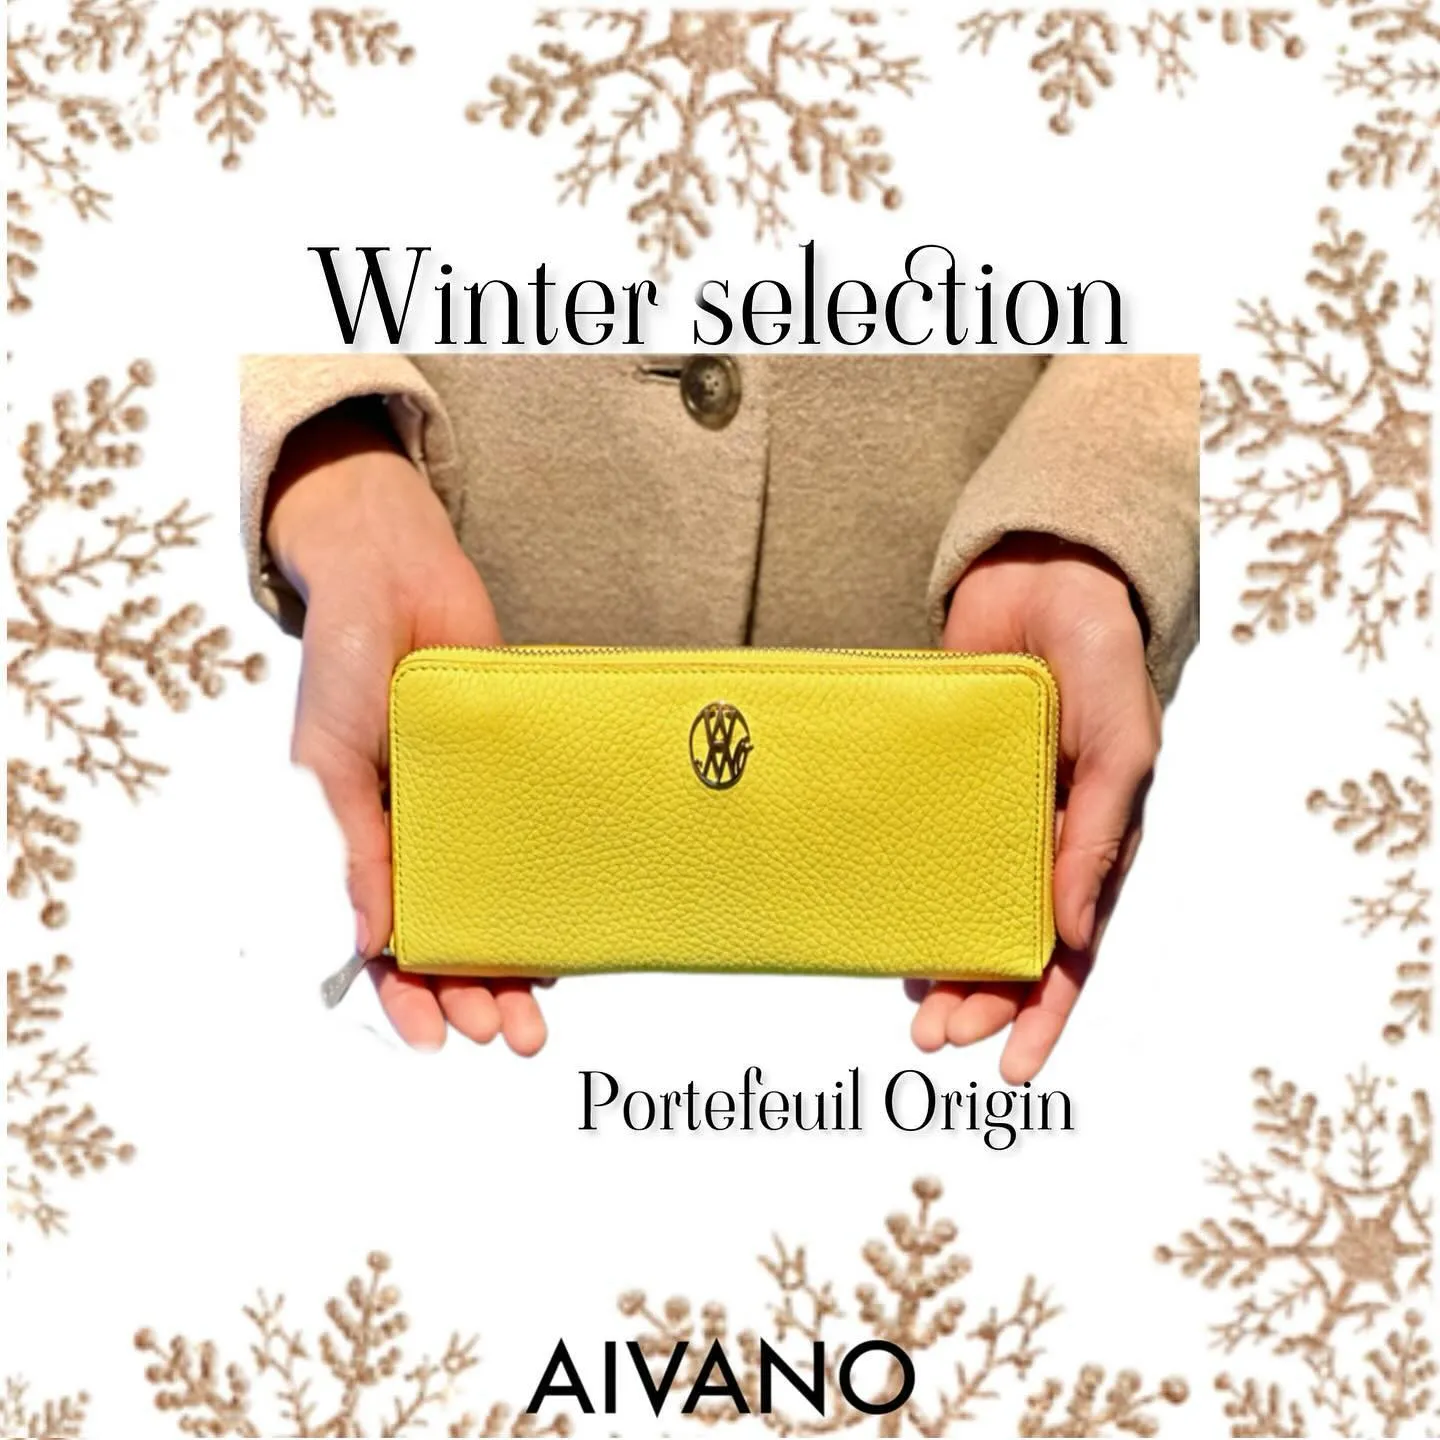 ⌘ AIVANO Winter selection No.1...